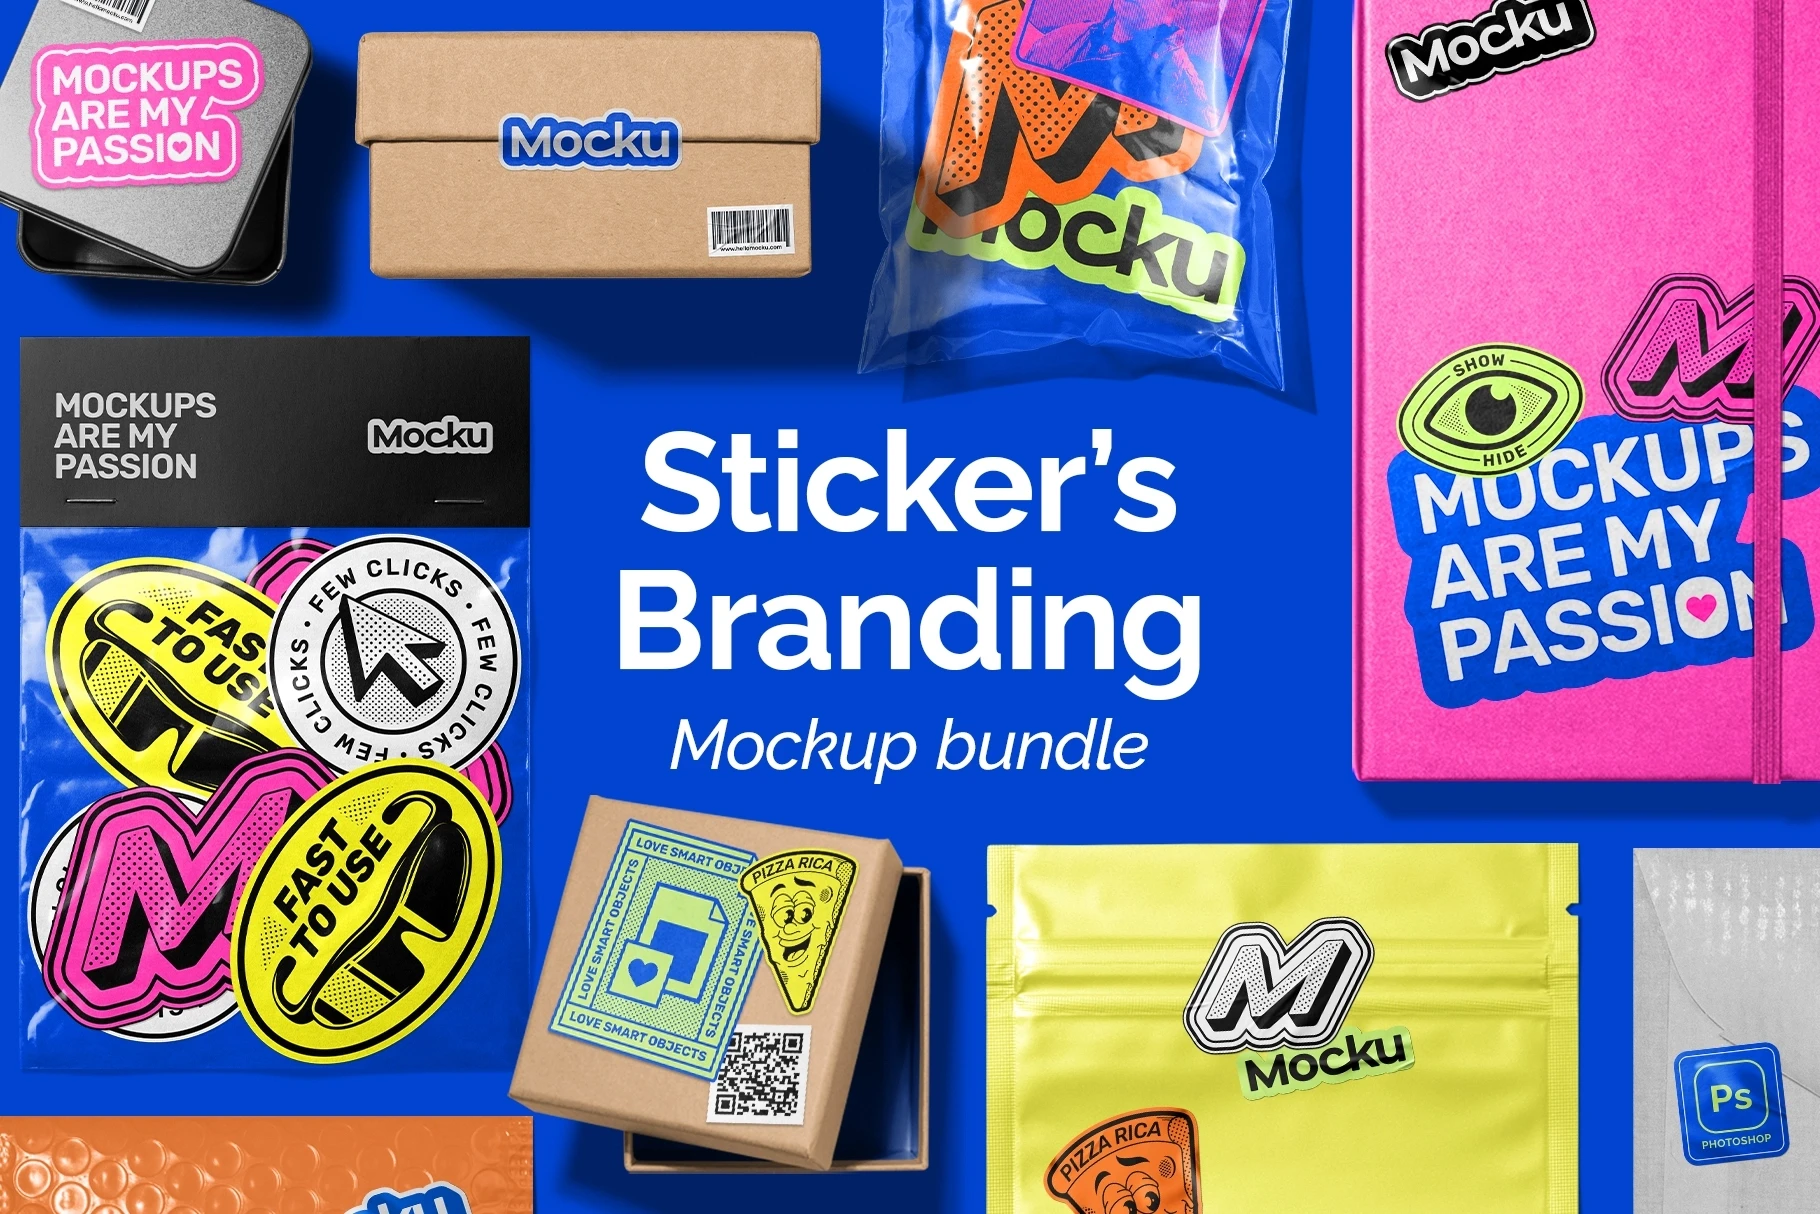 Sticker's Branding Mockup Bundlethumbnaile